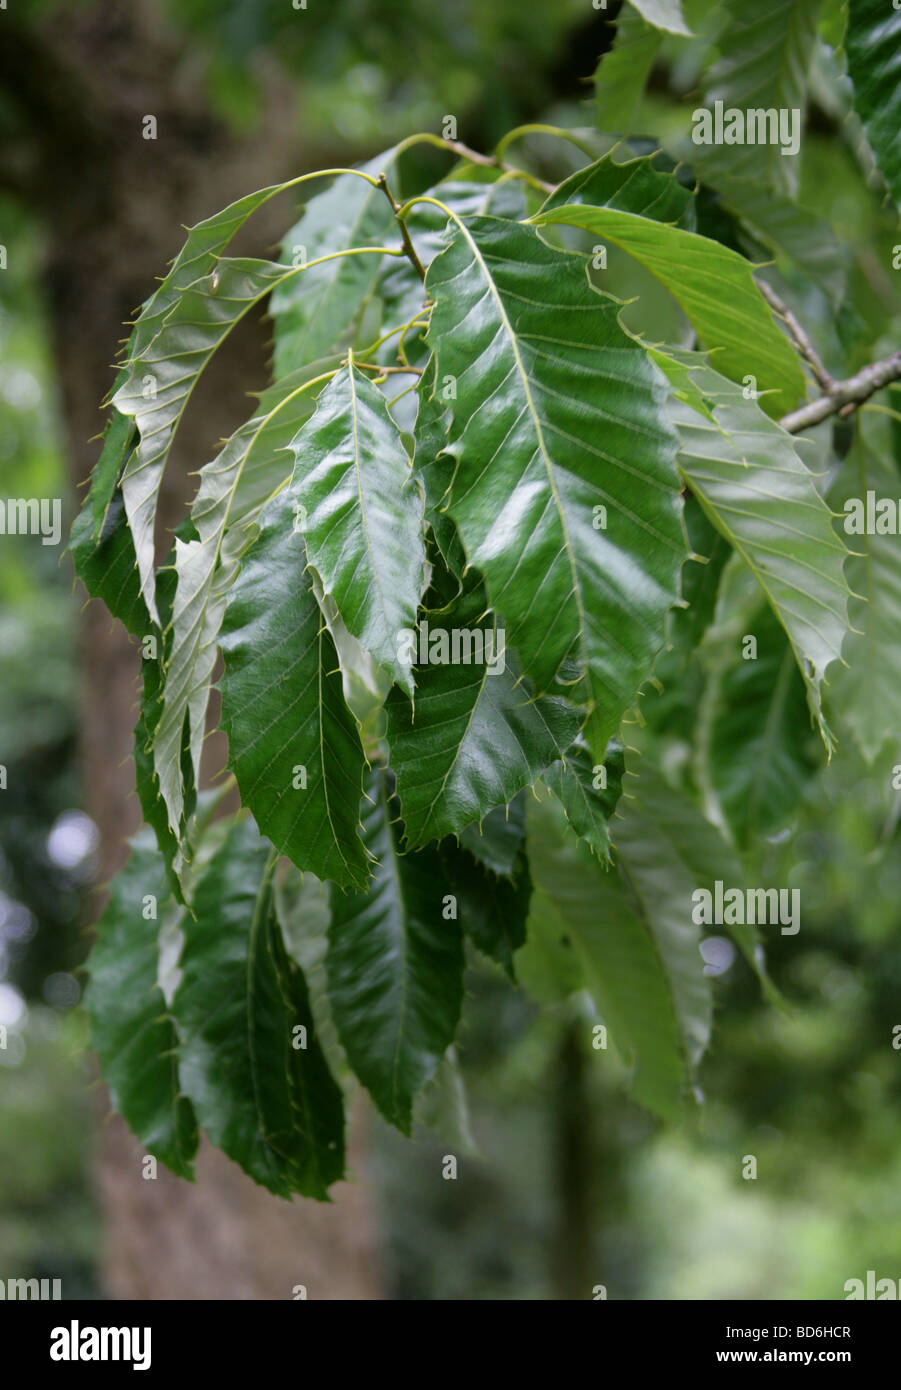 Orientale Cinese o di querce da sughero in foglie di albero, Quercus coenobita, Fagaceae, Cina, Giappone Foto Stock